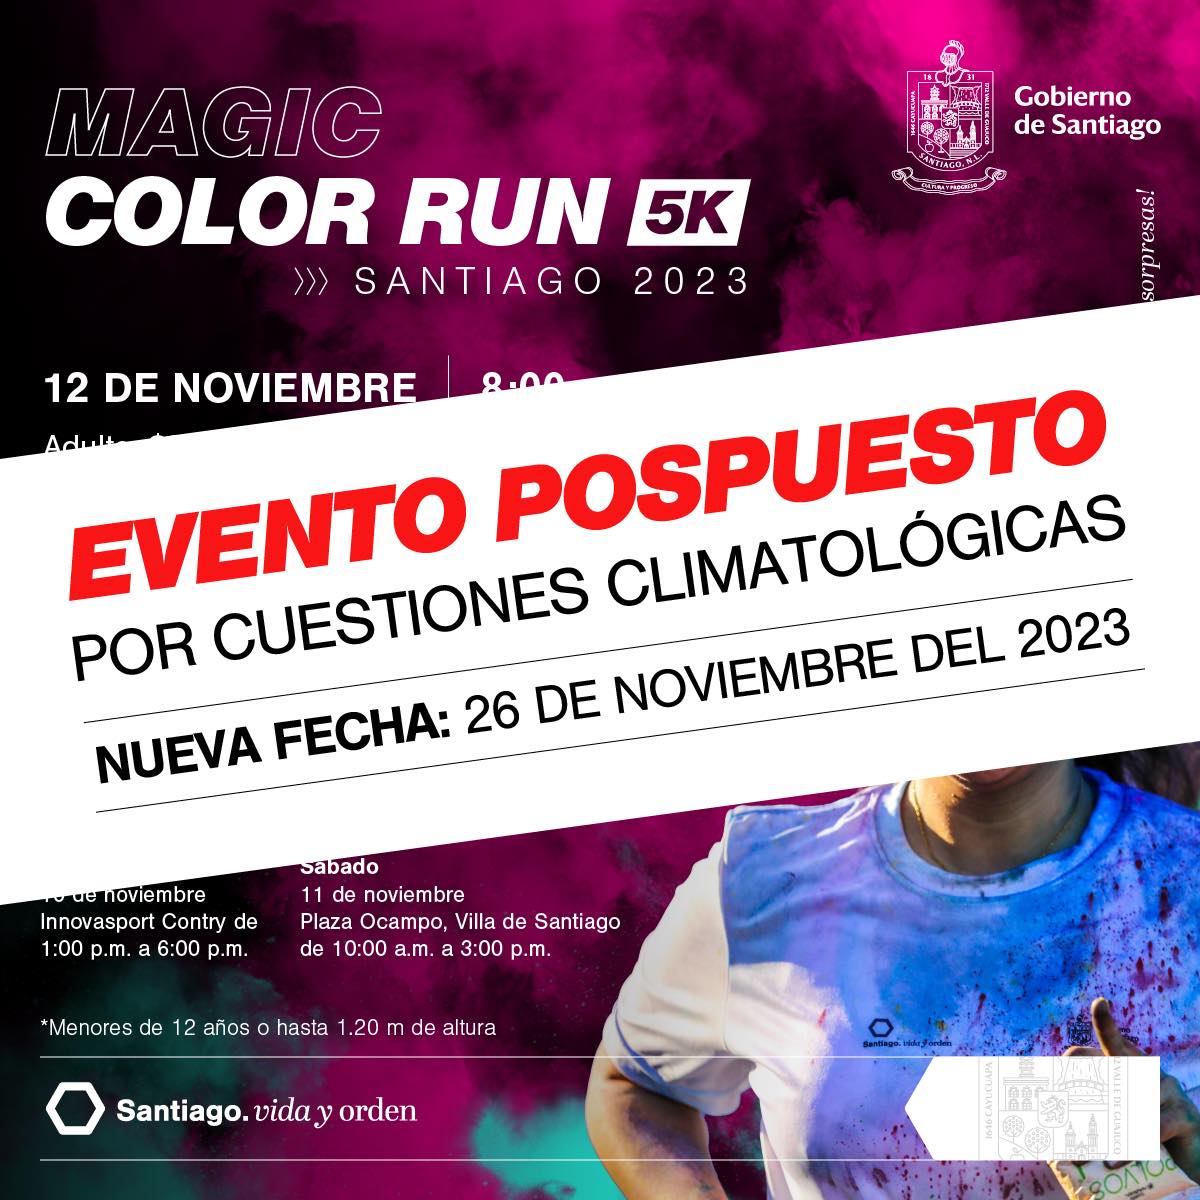 Magic Color Run 5K Santiago 2023